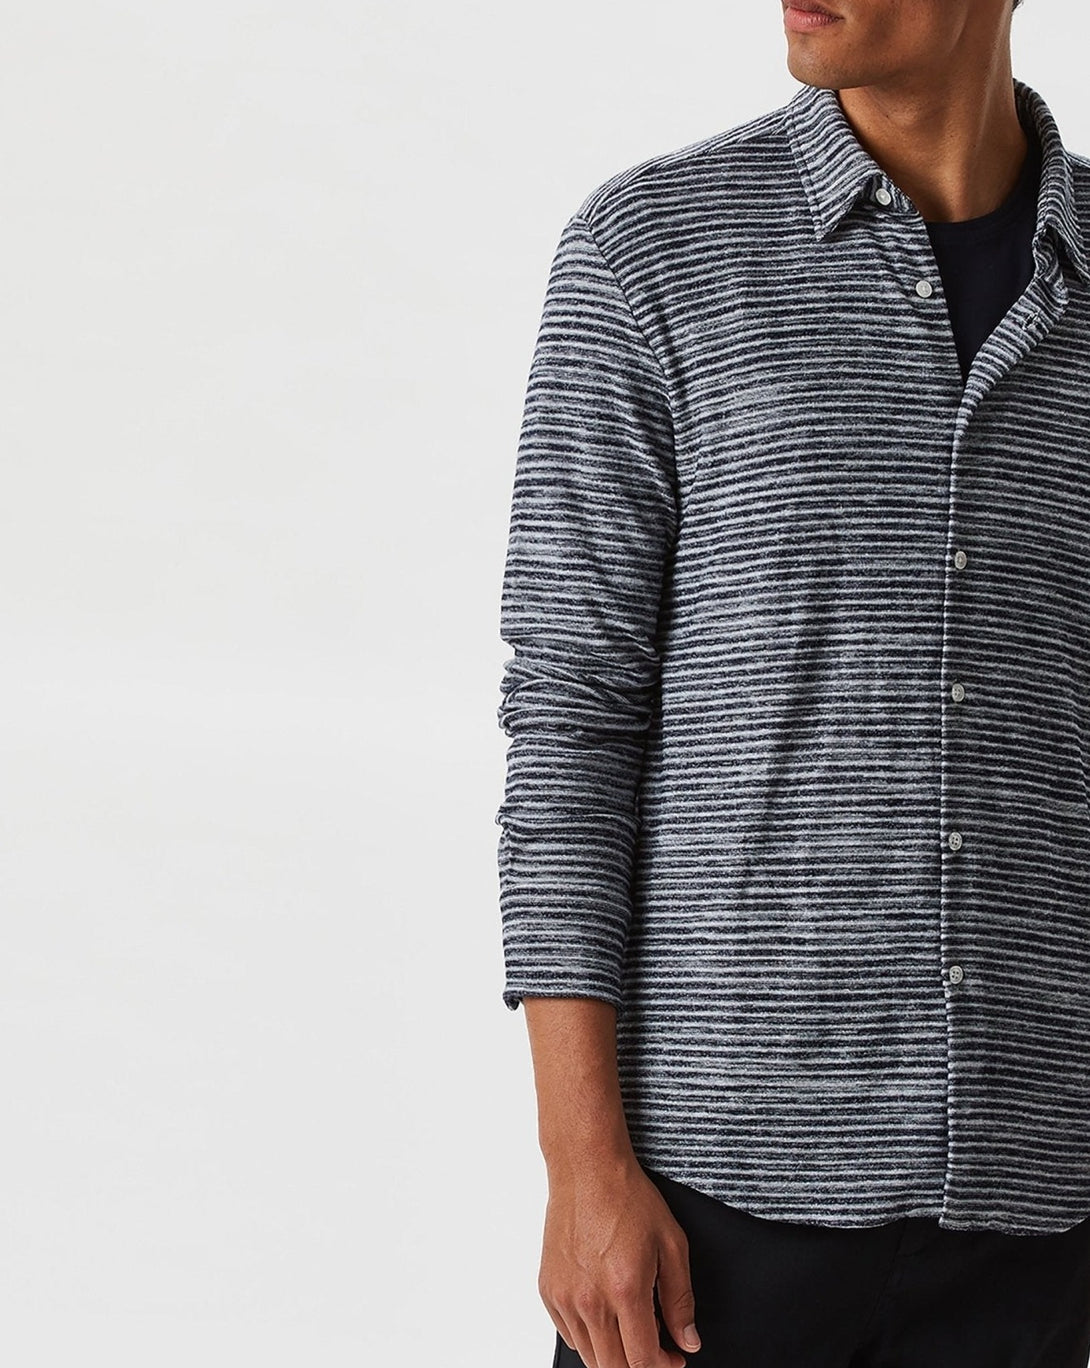 Men Shirt | Long Sleeve Knitted Stripe Shirt by Spanish designer Adolfo Dominguez